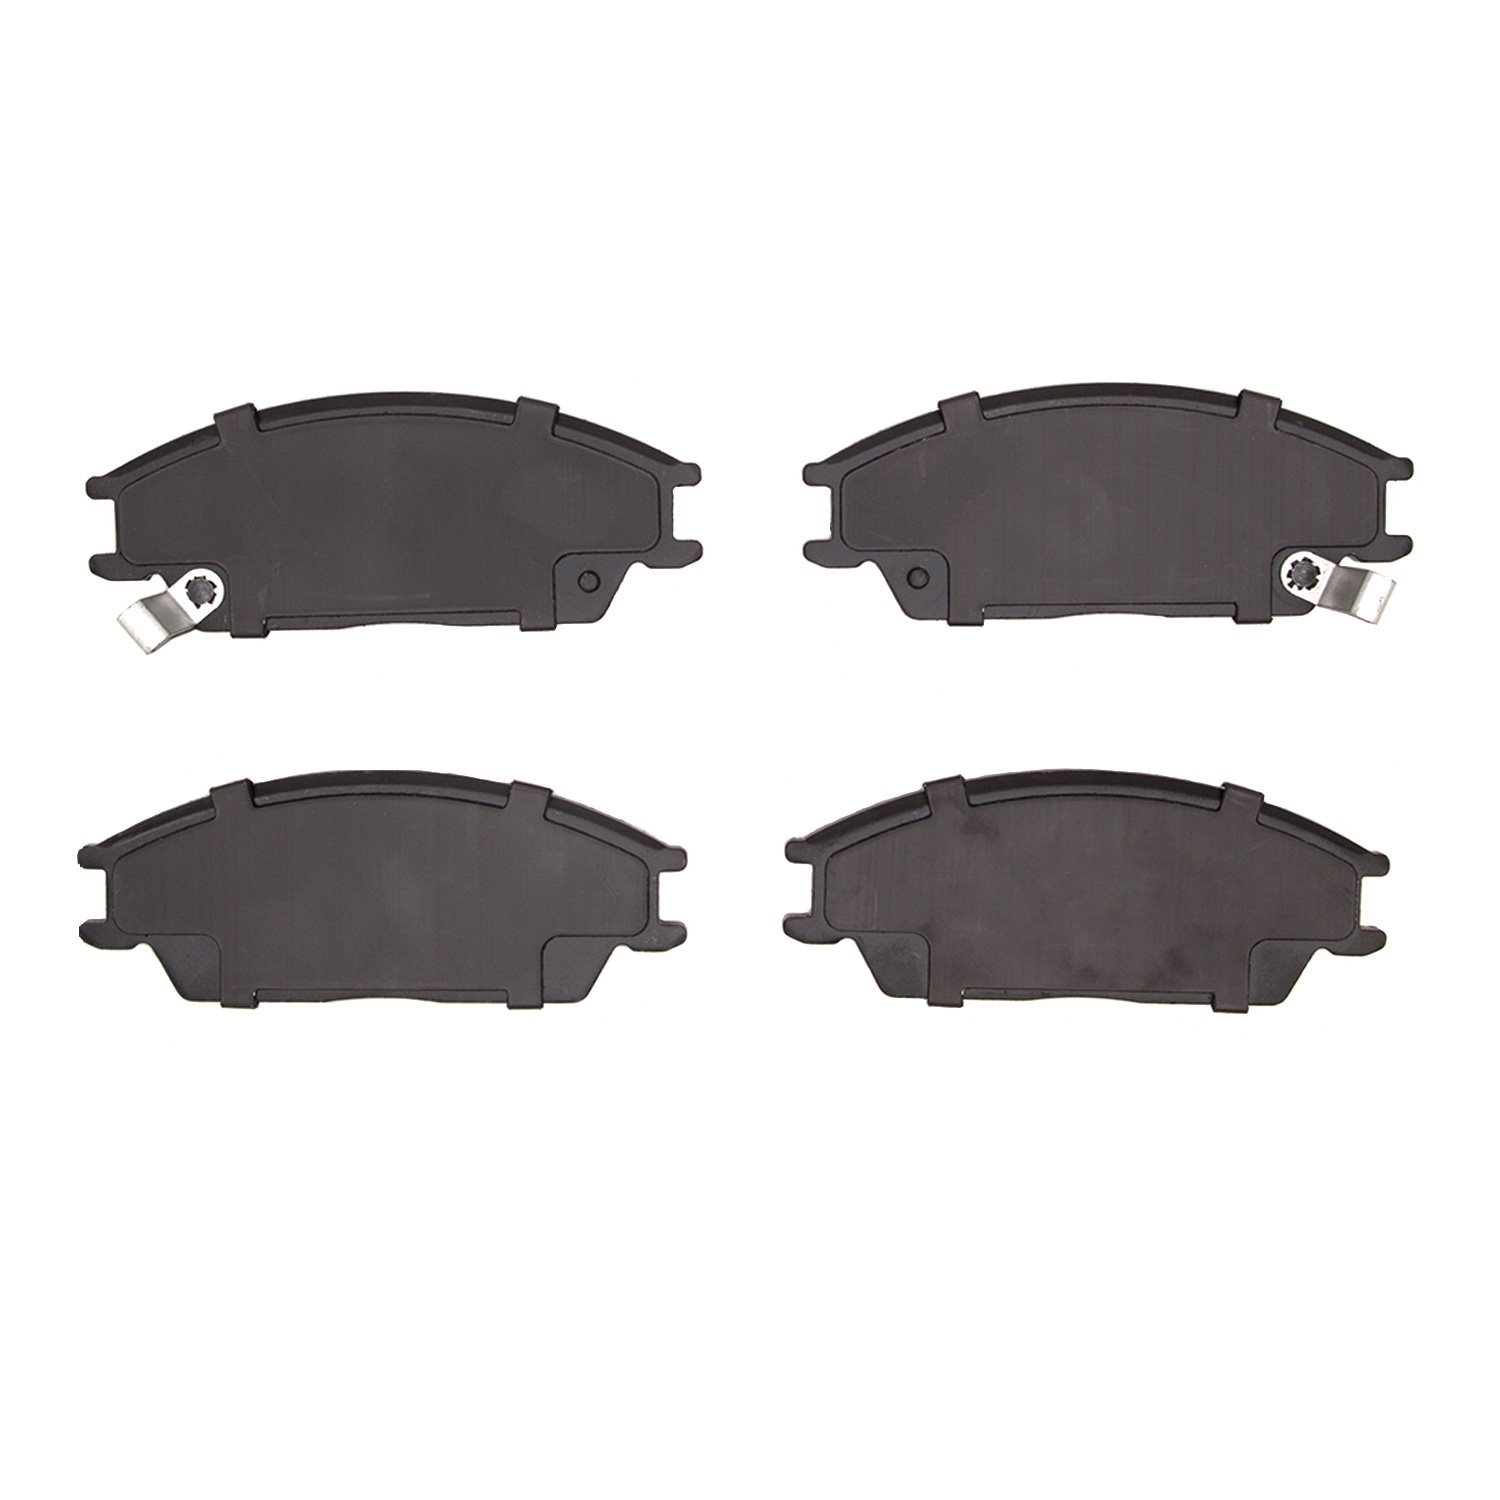 1310-0440-00 3000-Series Ceramic Brake Pads, 1987-2006 Multiple Makes/Models, Position: Front